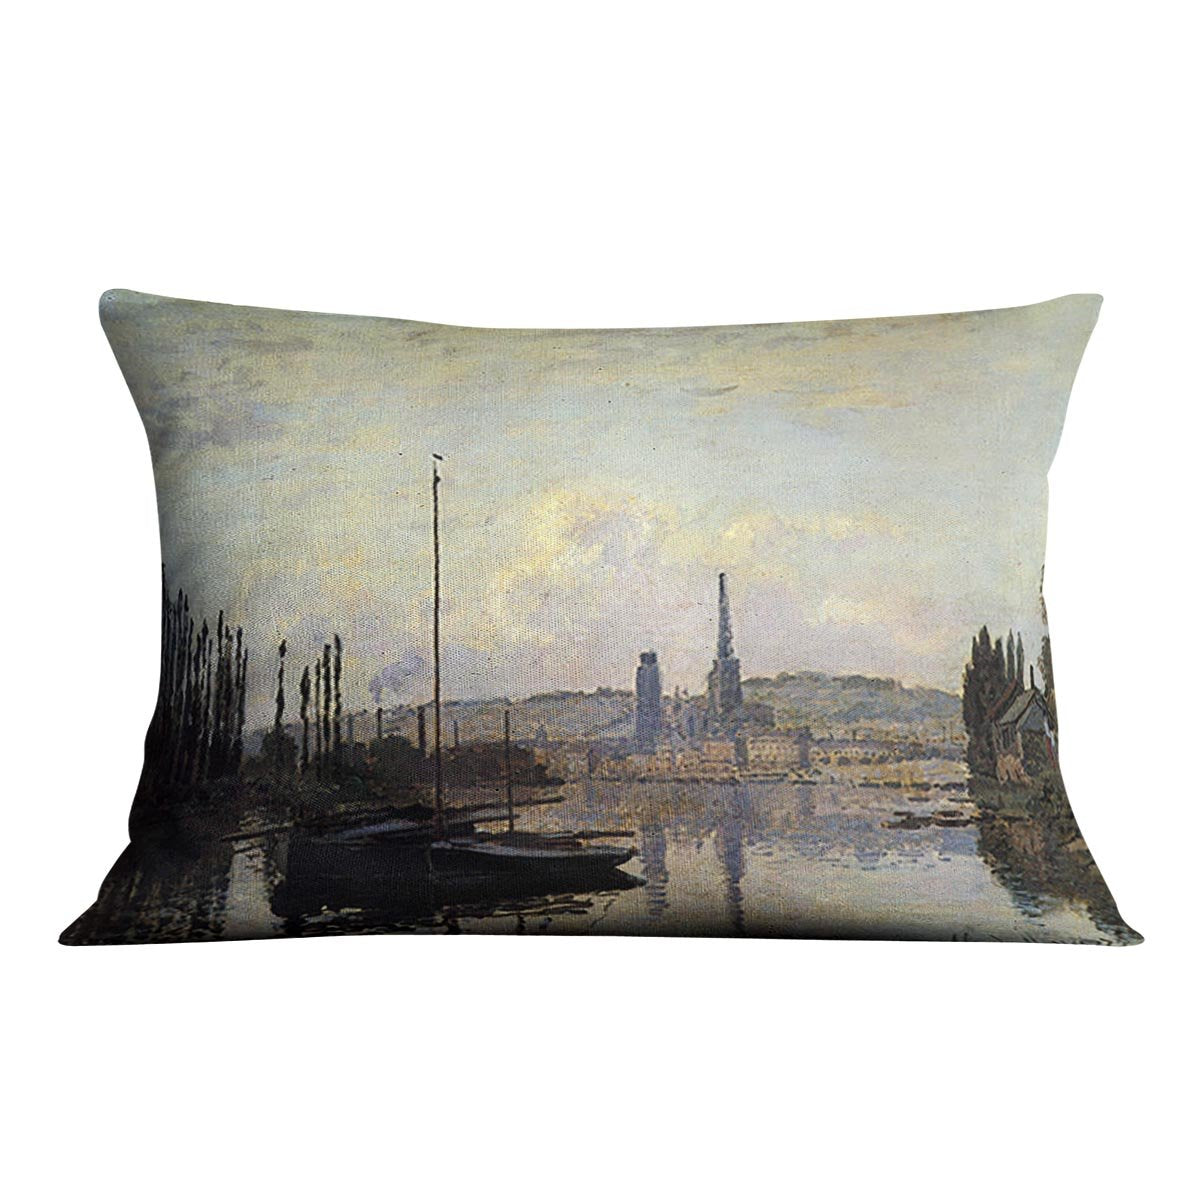 View of Rouen by Monet Throw Pillow